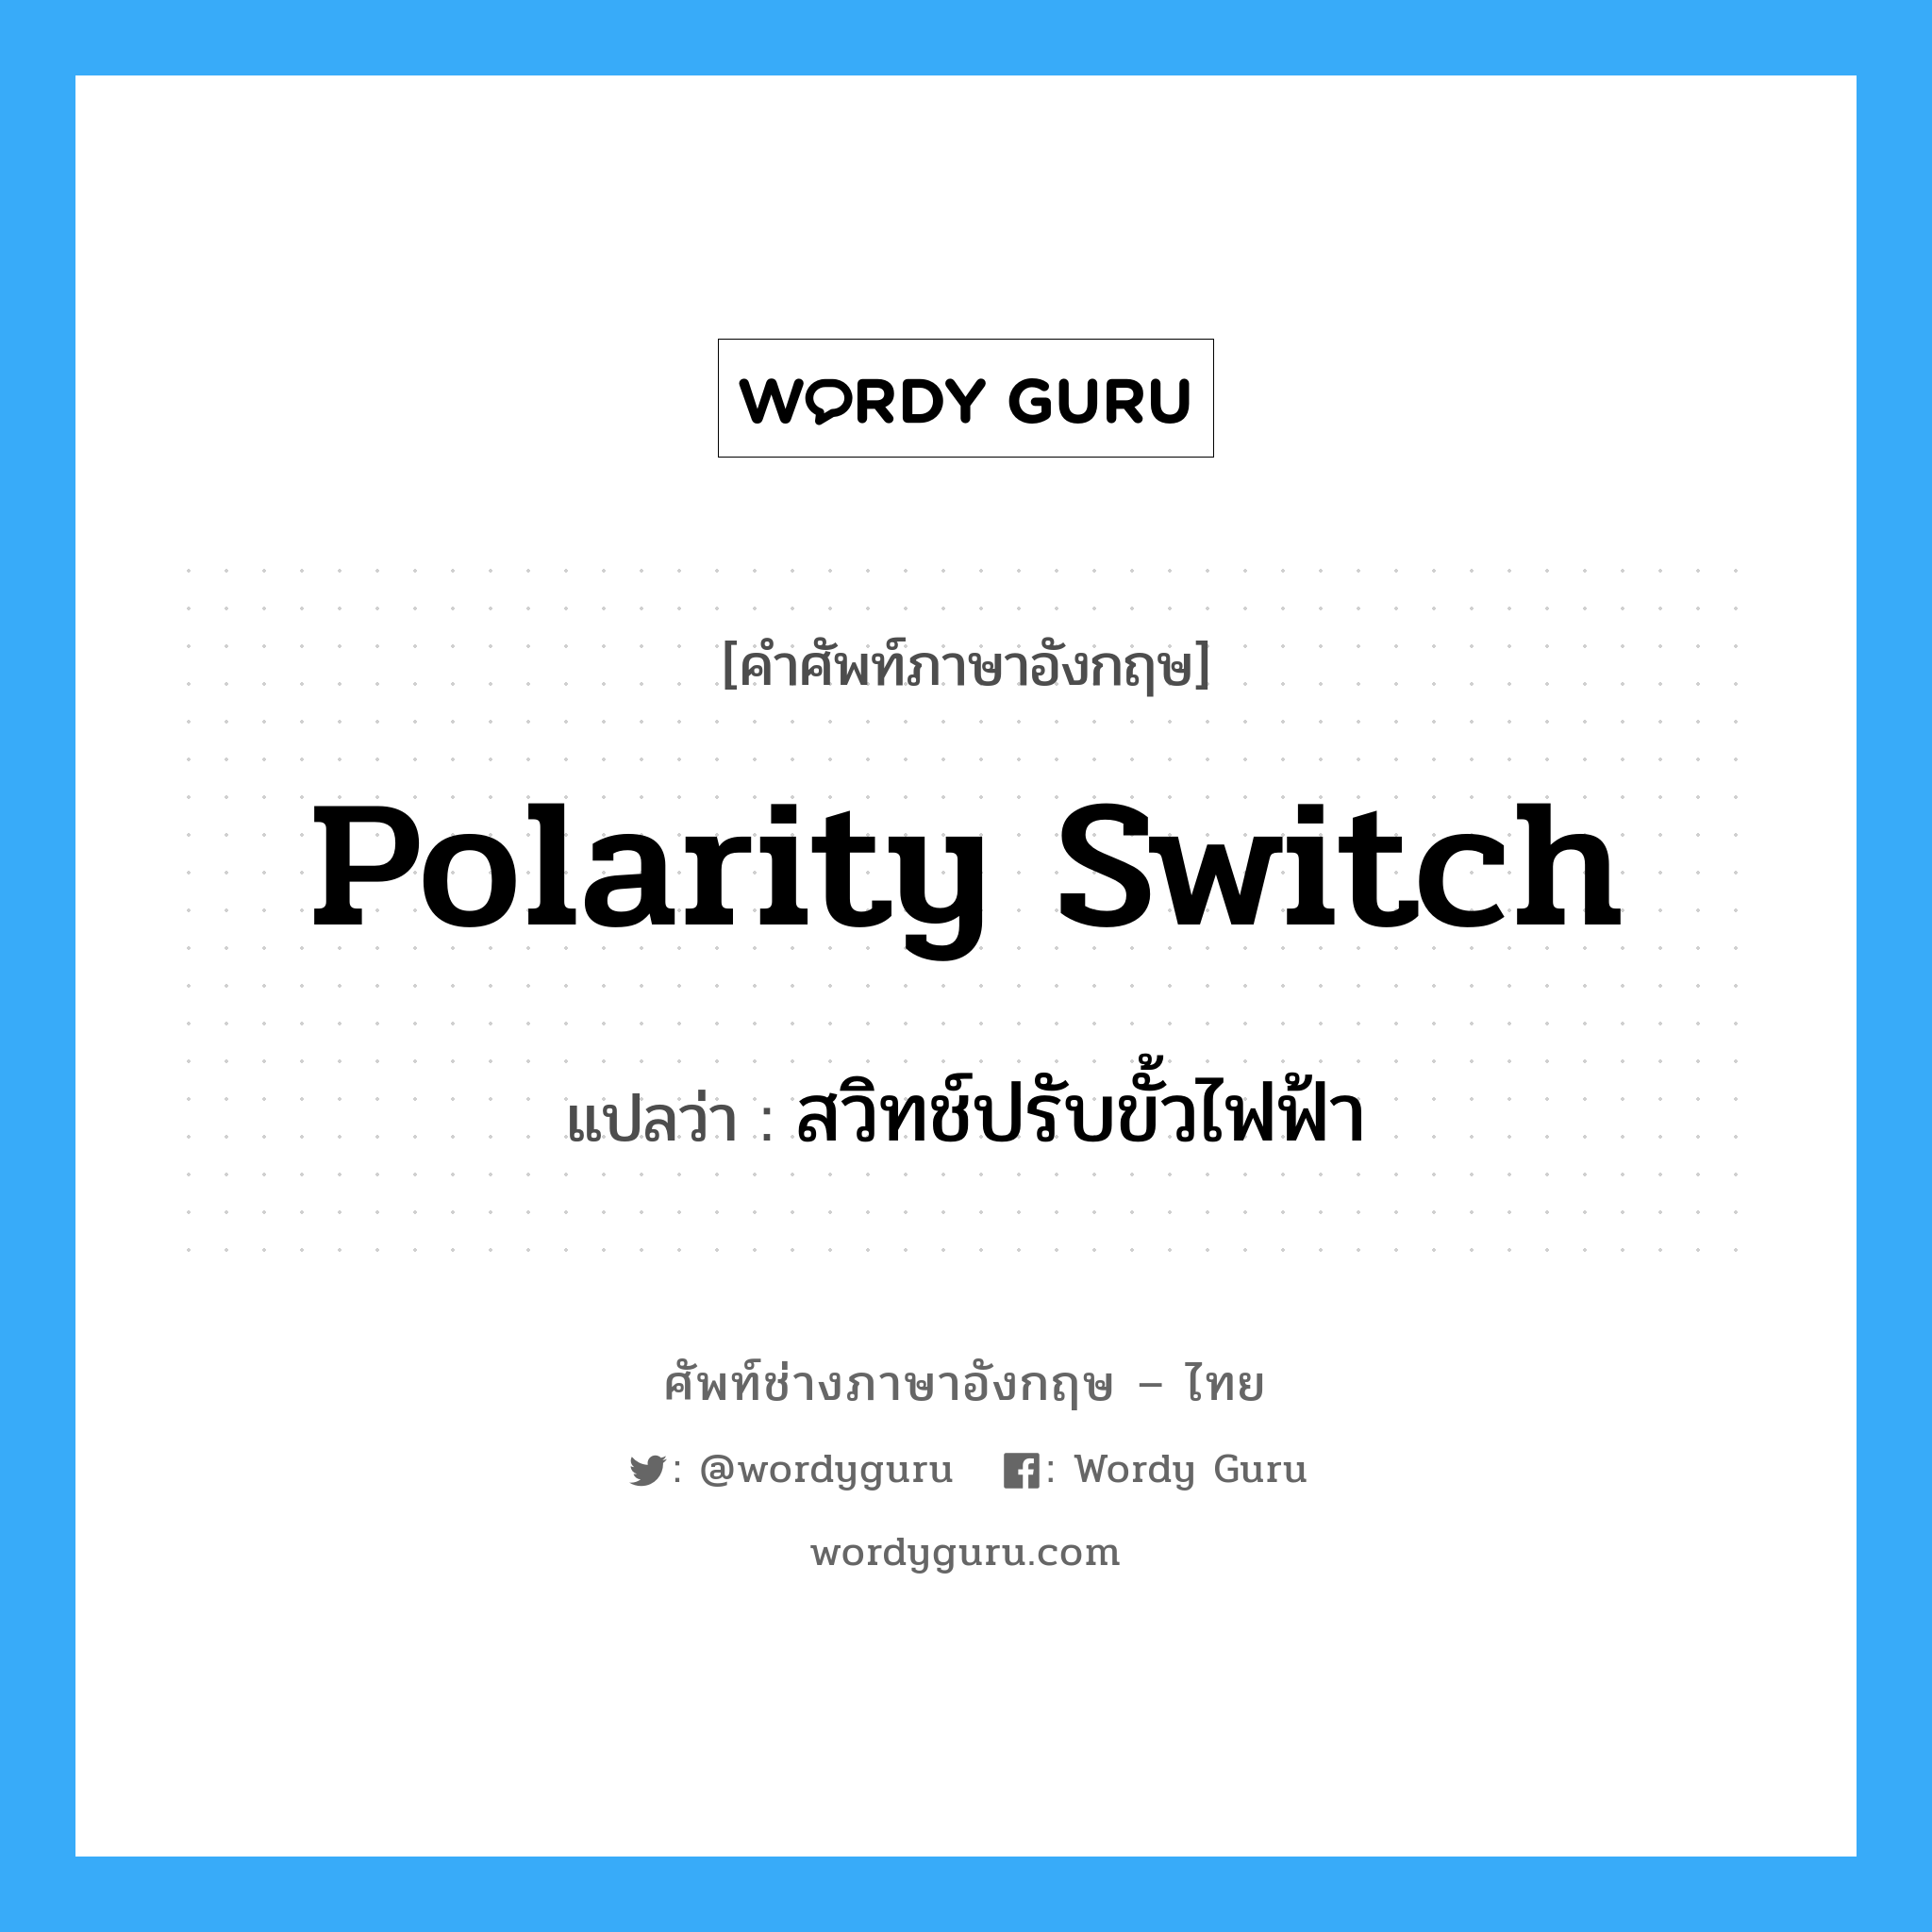 polarity switch แปลว่า?, คำศัพท์ช่างภาษาอังกฤษ - ไทย polarity switch คำศัพท์ภาษาอังกฤษ polarity switch แปลว่า สวิทช์ปรับขั้วไฟฟ้า